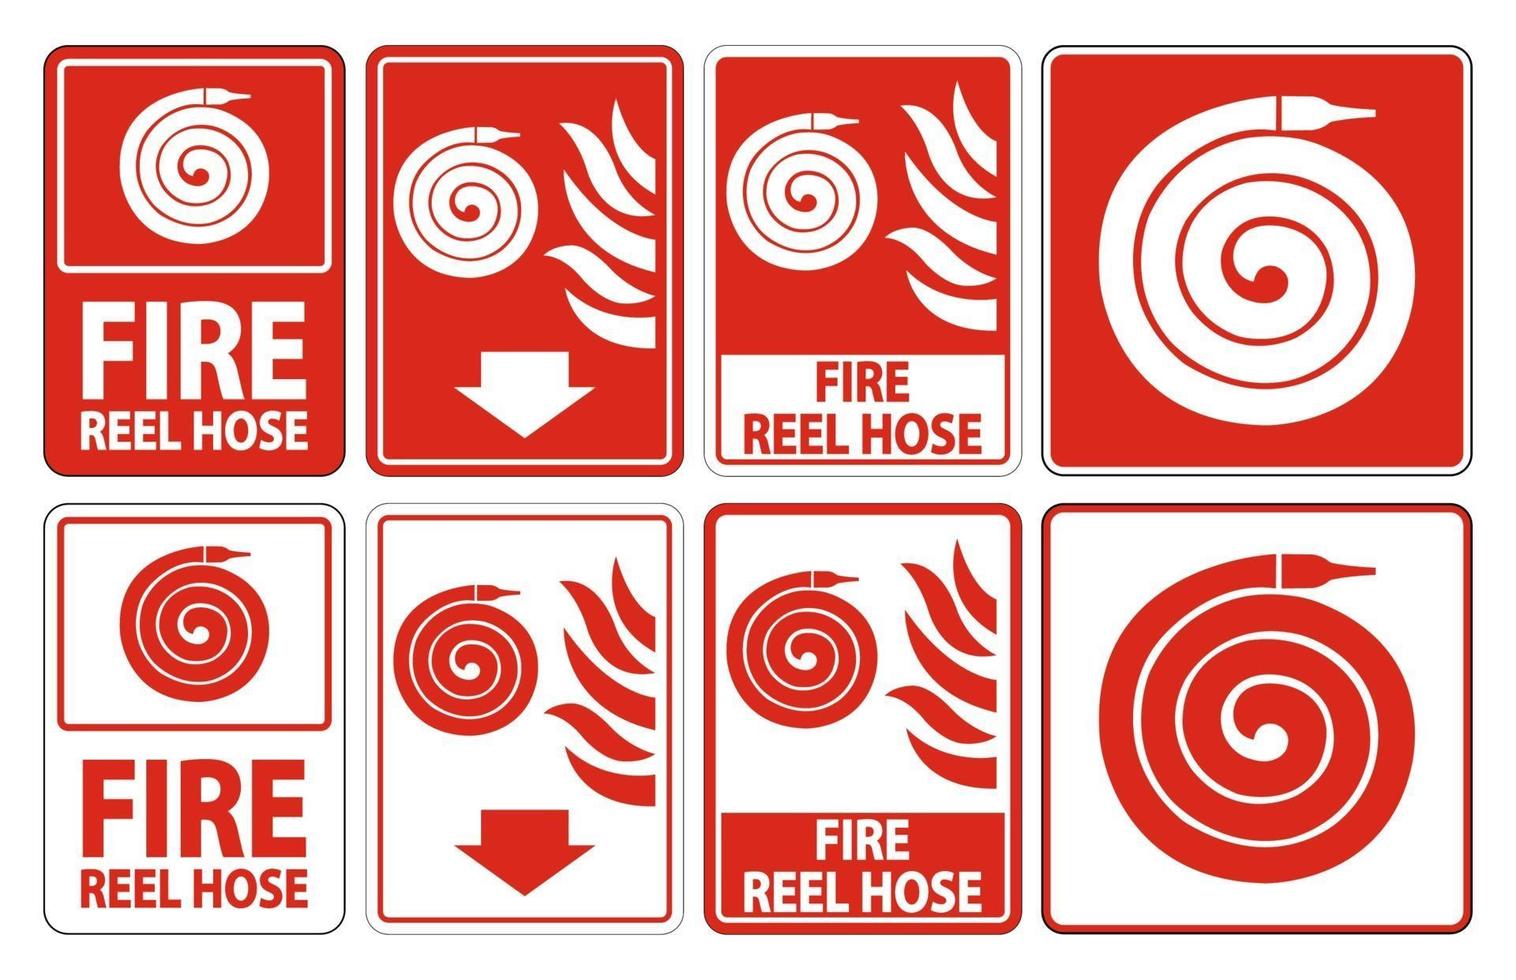 Fire Reel Hose Floor Sign Isolate On White Background,Vector Illustration EPS.10 vector